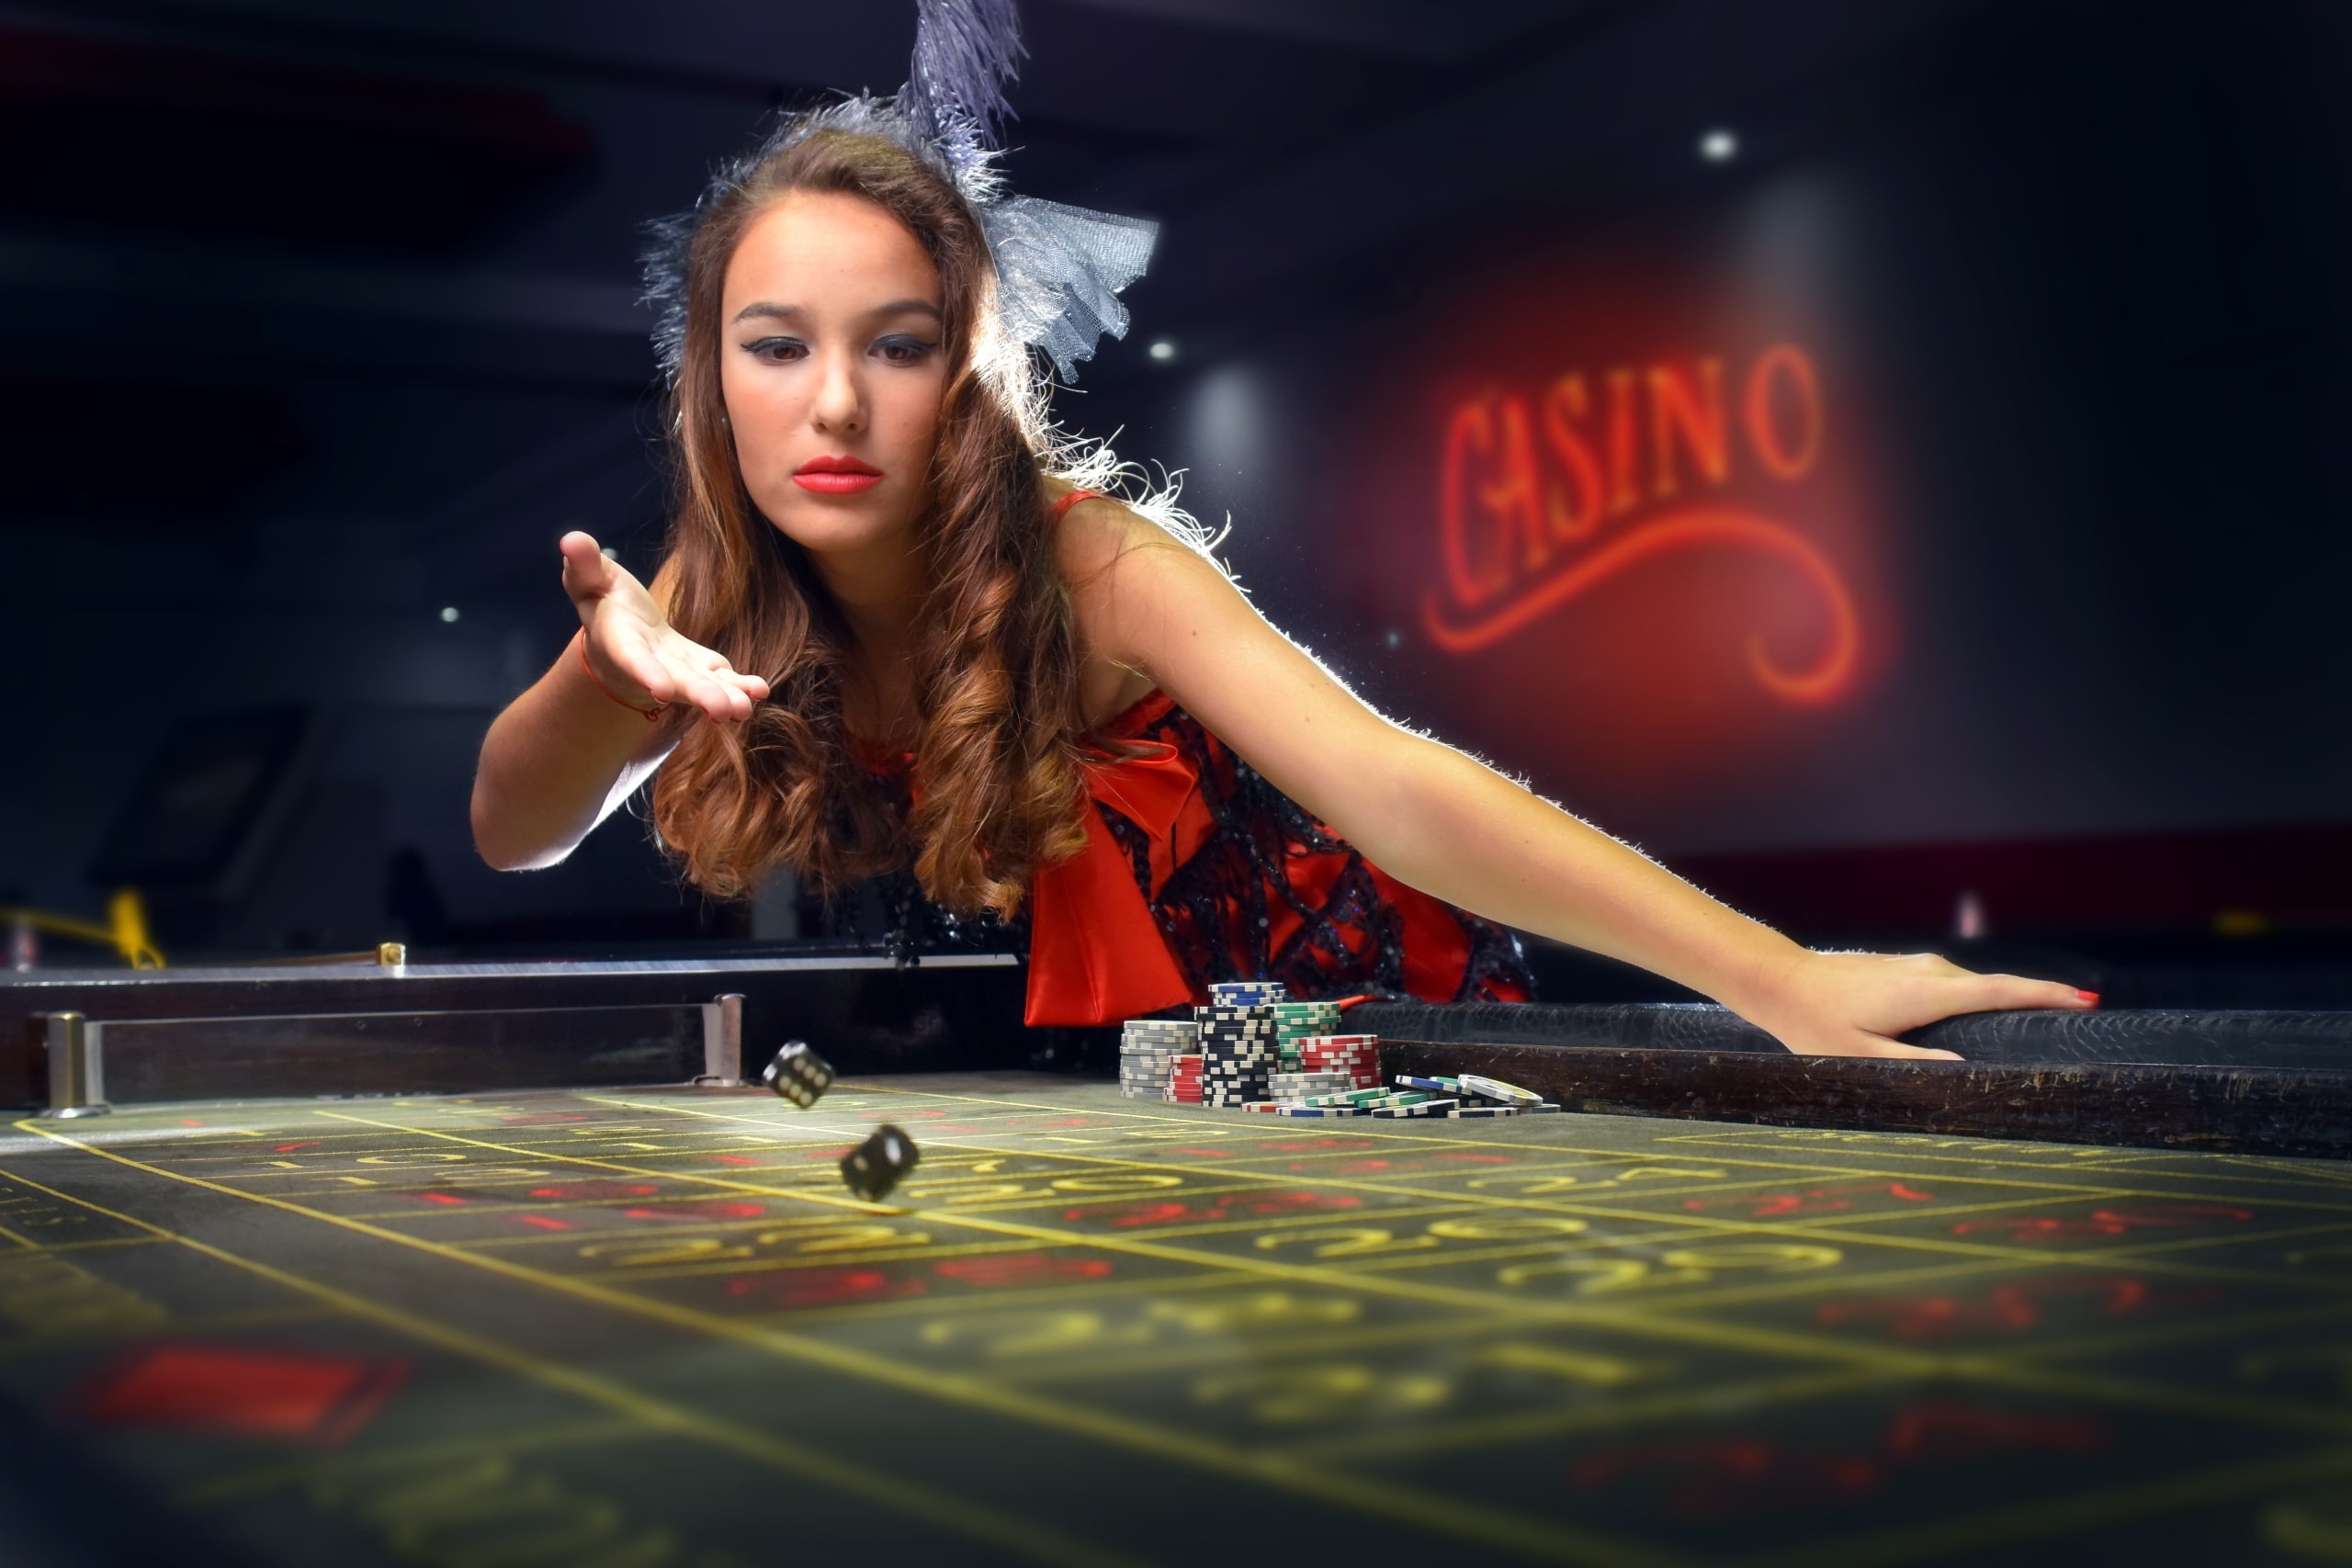 Casino, gambling, dice, women, leisure activity, young adult